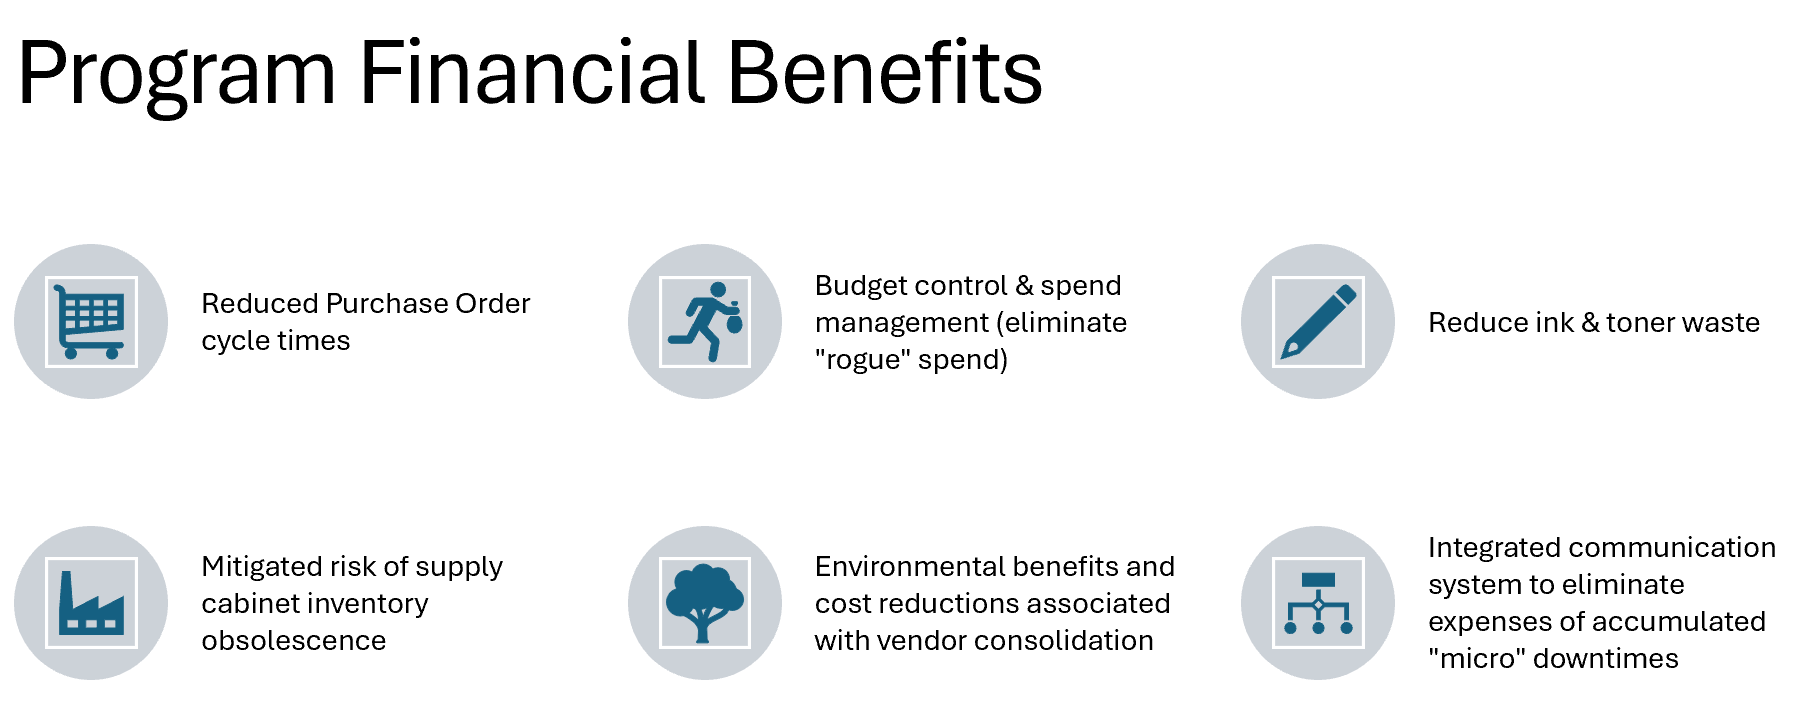 Program Financial Benefits